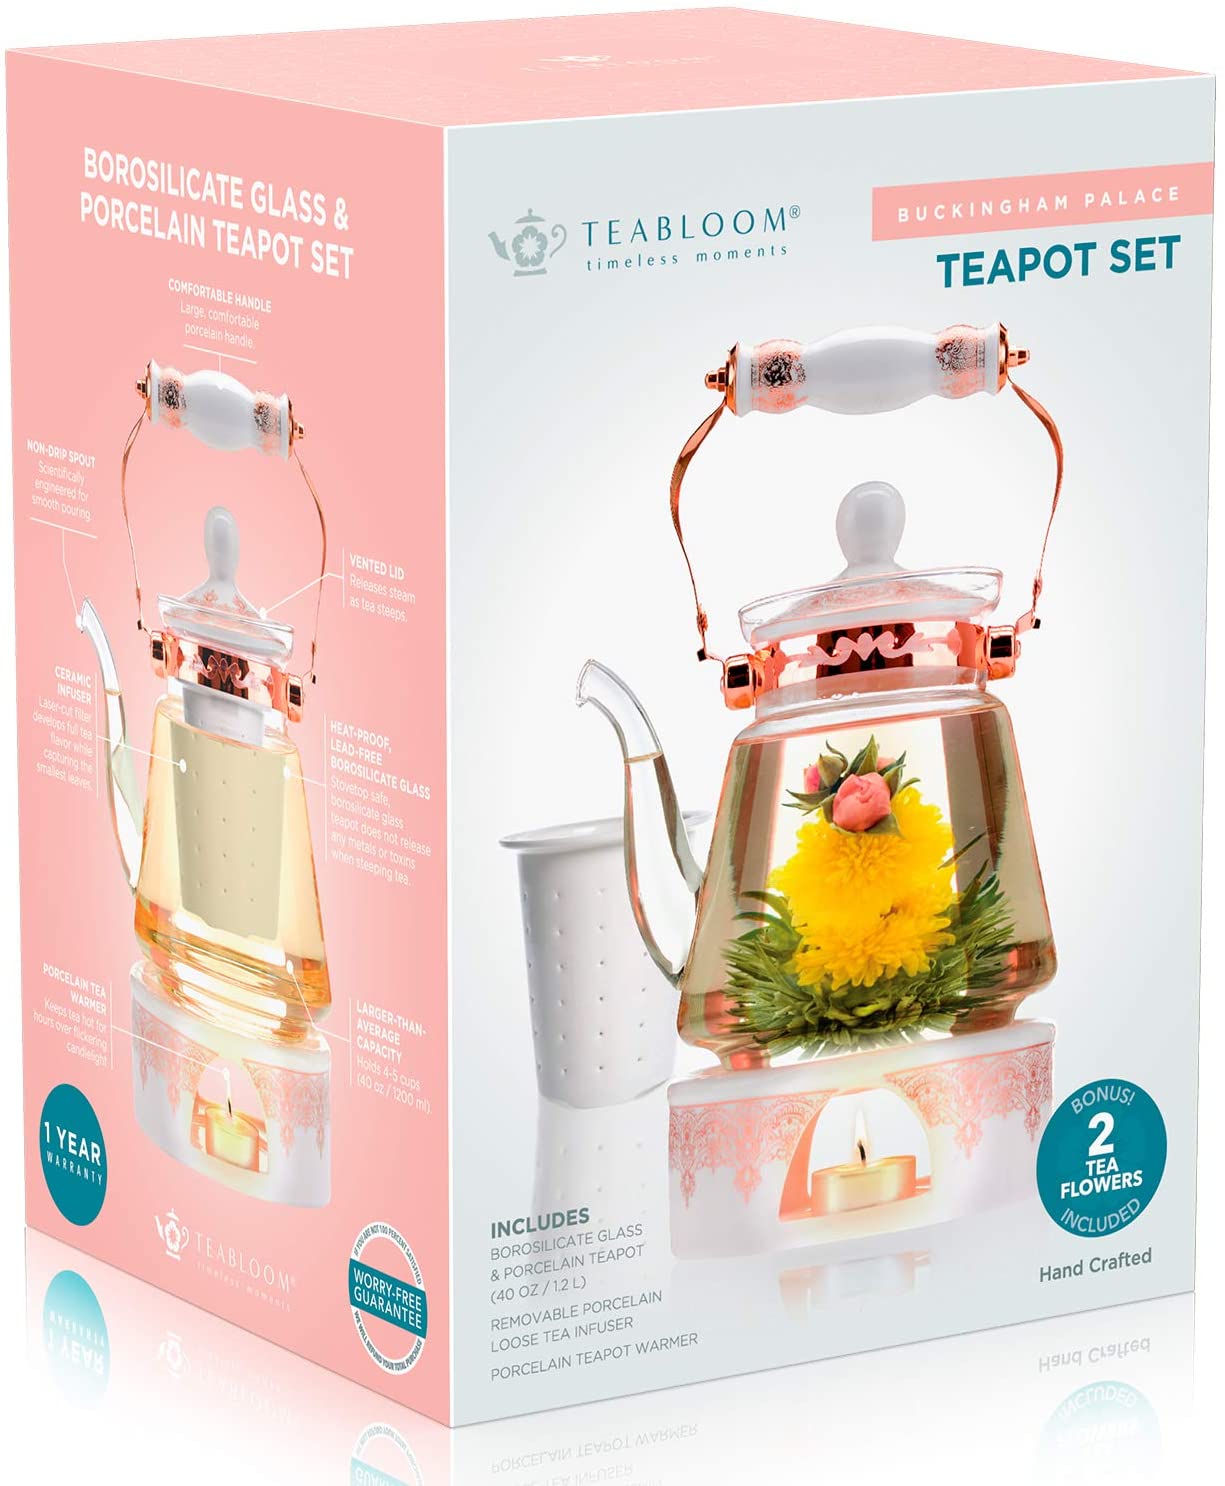 Teabloom Buckingham Palace Teapot & Flowering Tea Gift Set (6 Pieces) - Stovetop Safe Glass Teapot (40 OZ / 1.2 L / 4-5 CUPS), Porcelain Lid, Tea Warmer... - image 5 of 6